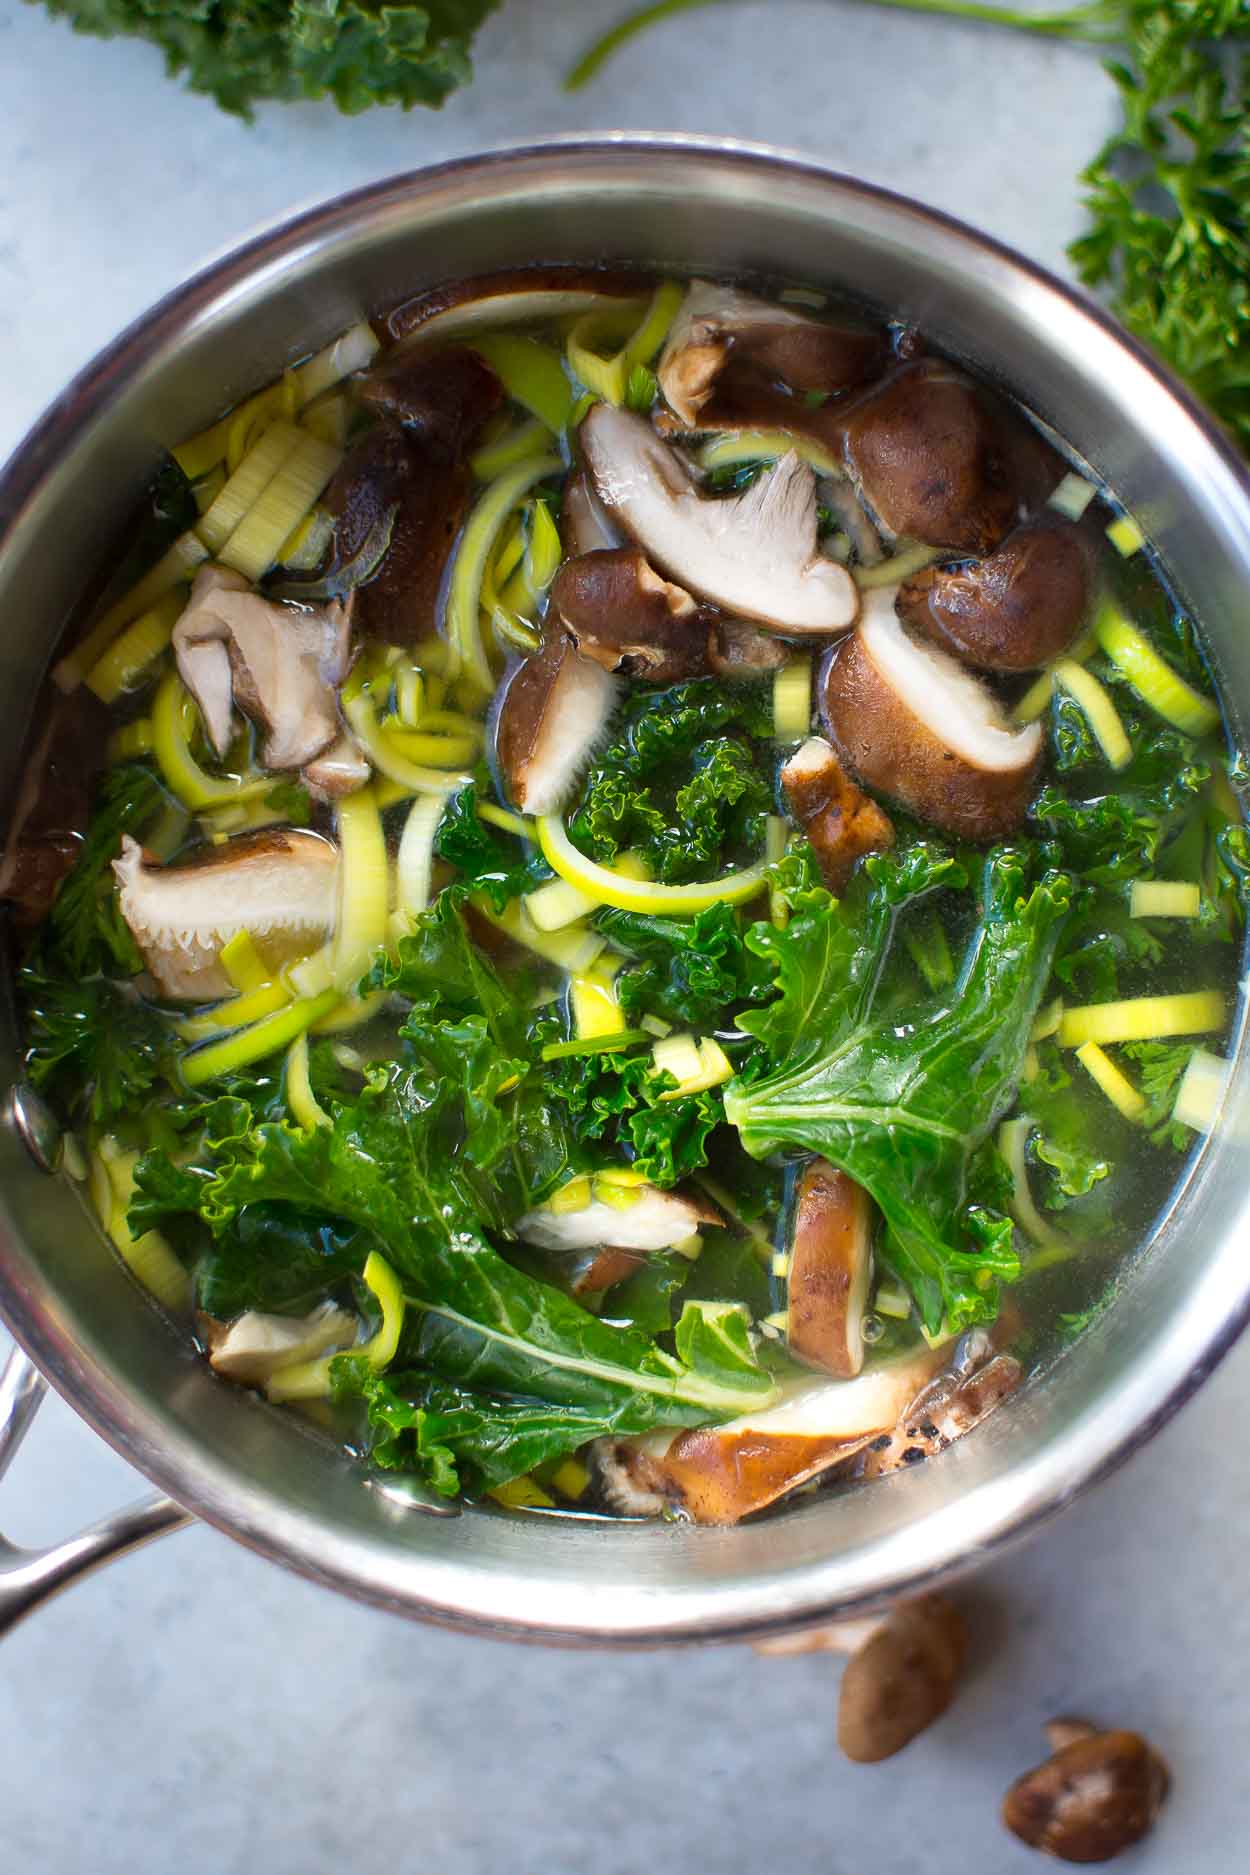 Shiitake mushrooms, kale and leeks in a saucepan